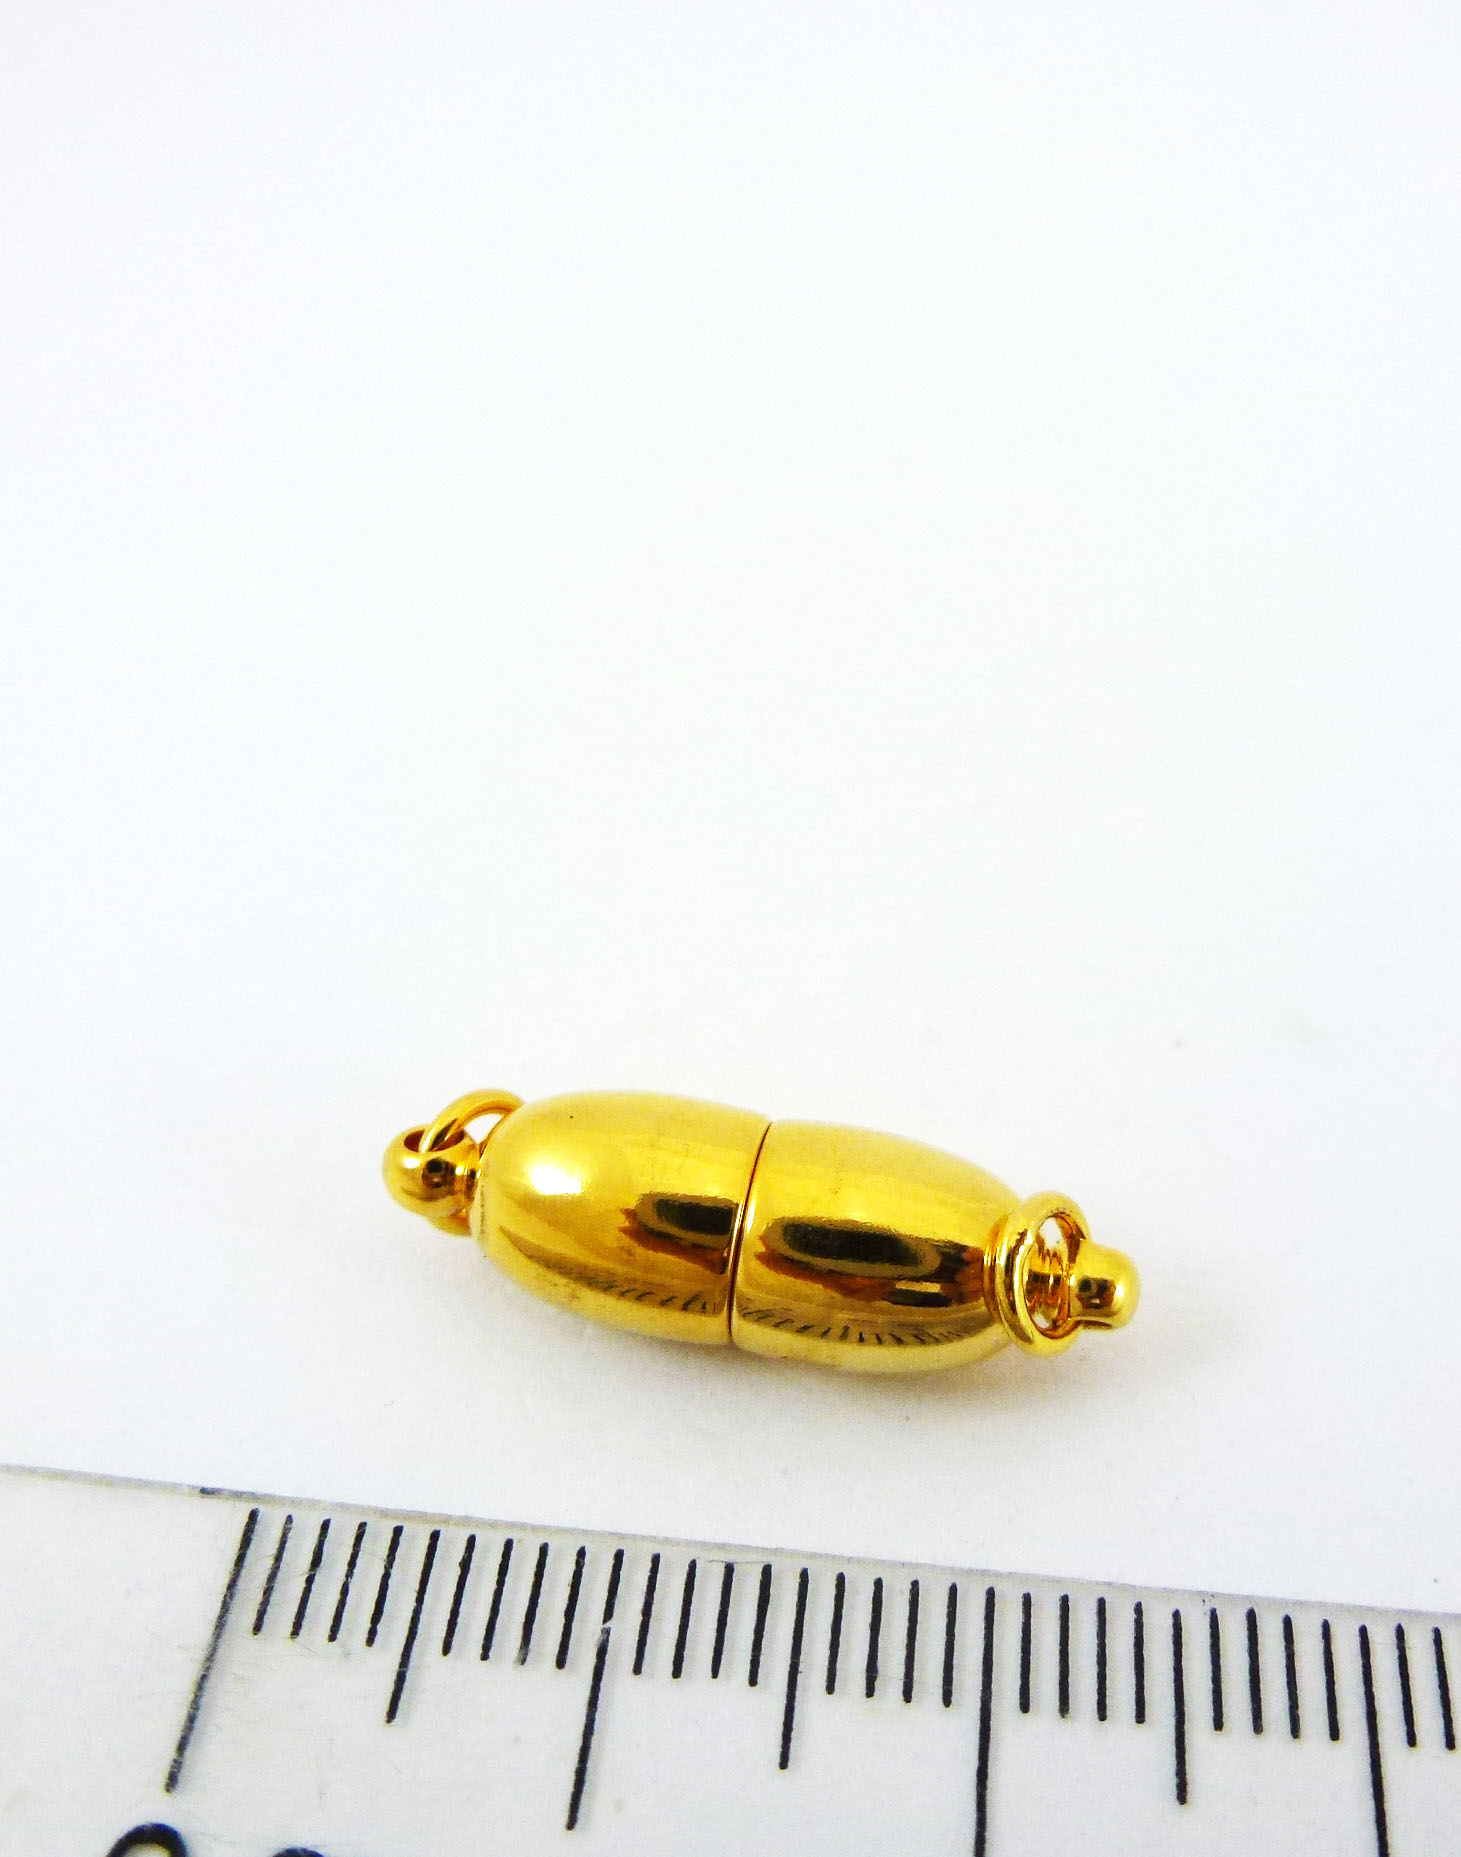 7x22mm銅鍍金色膠囊形磁鐵扣